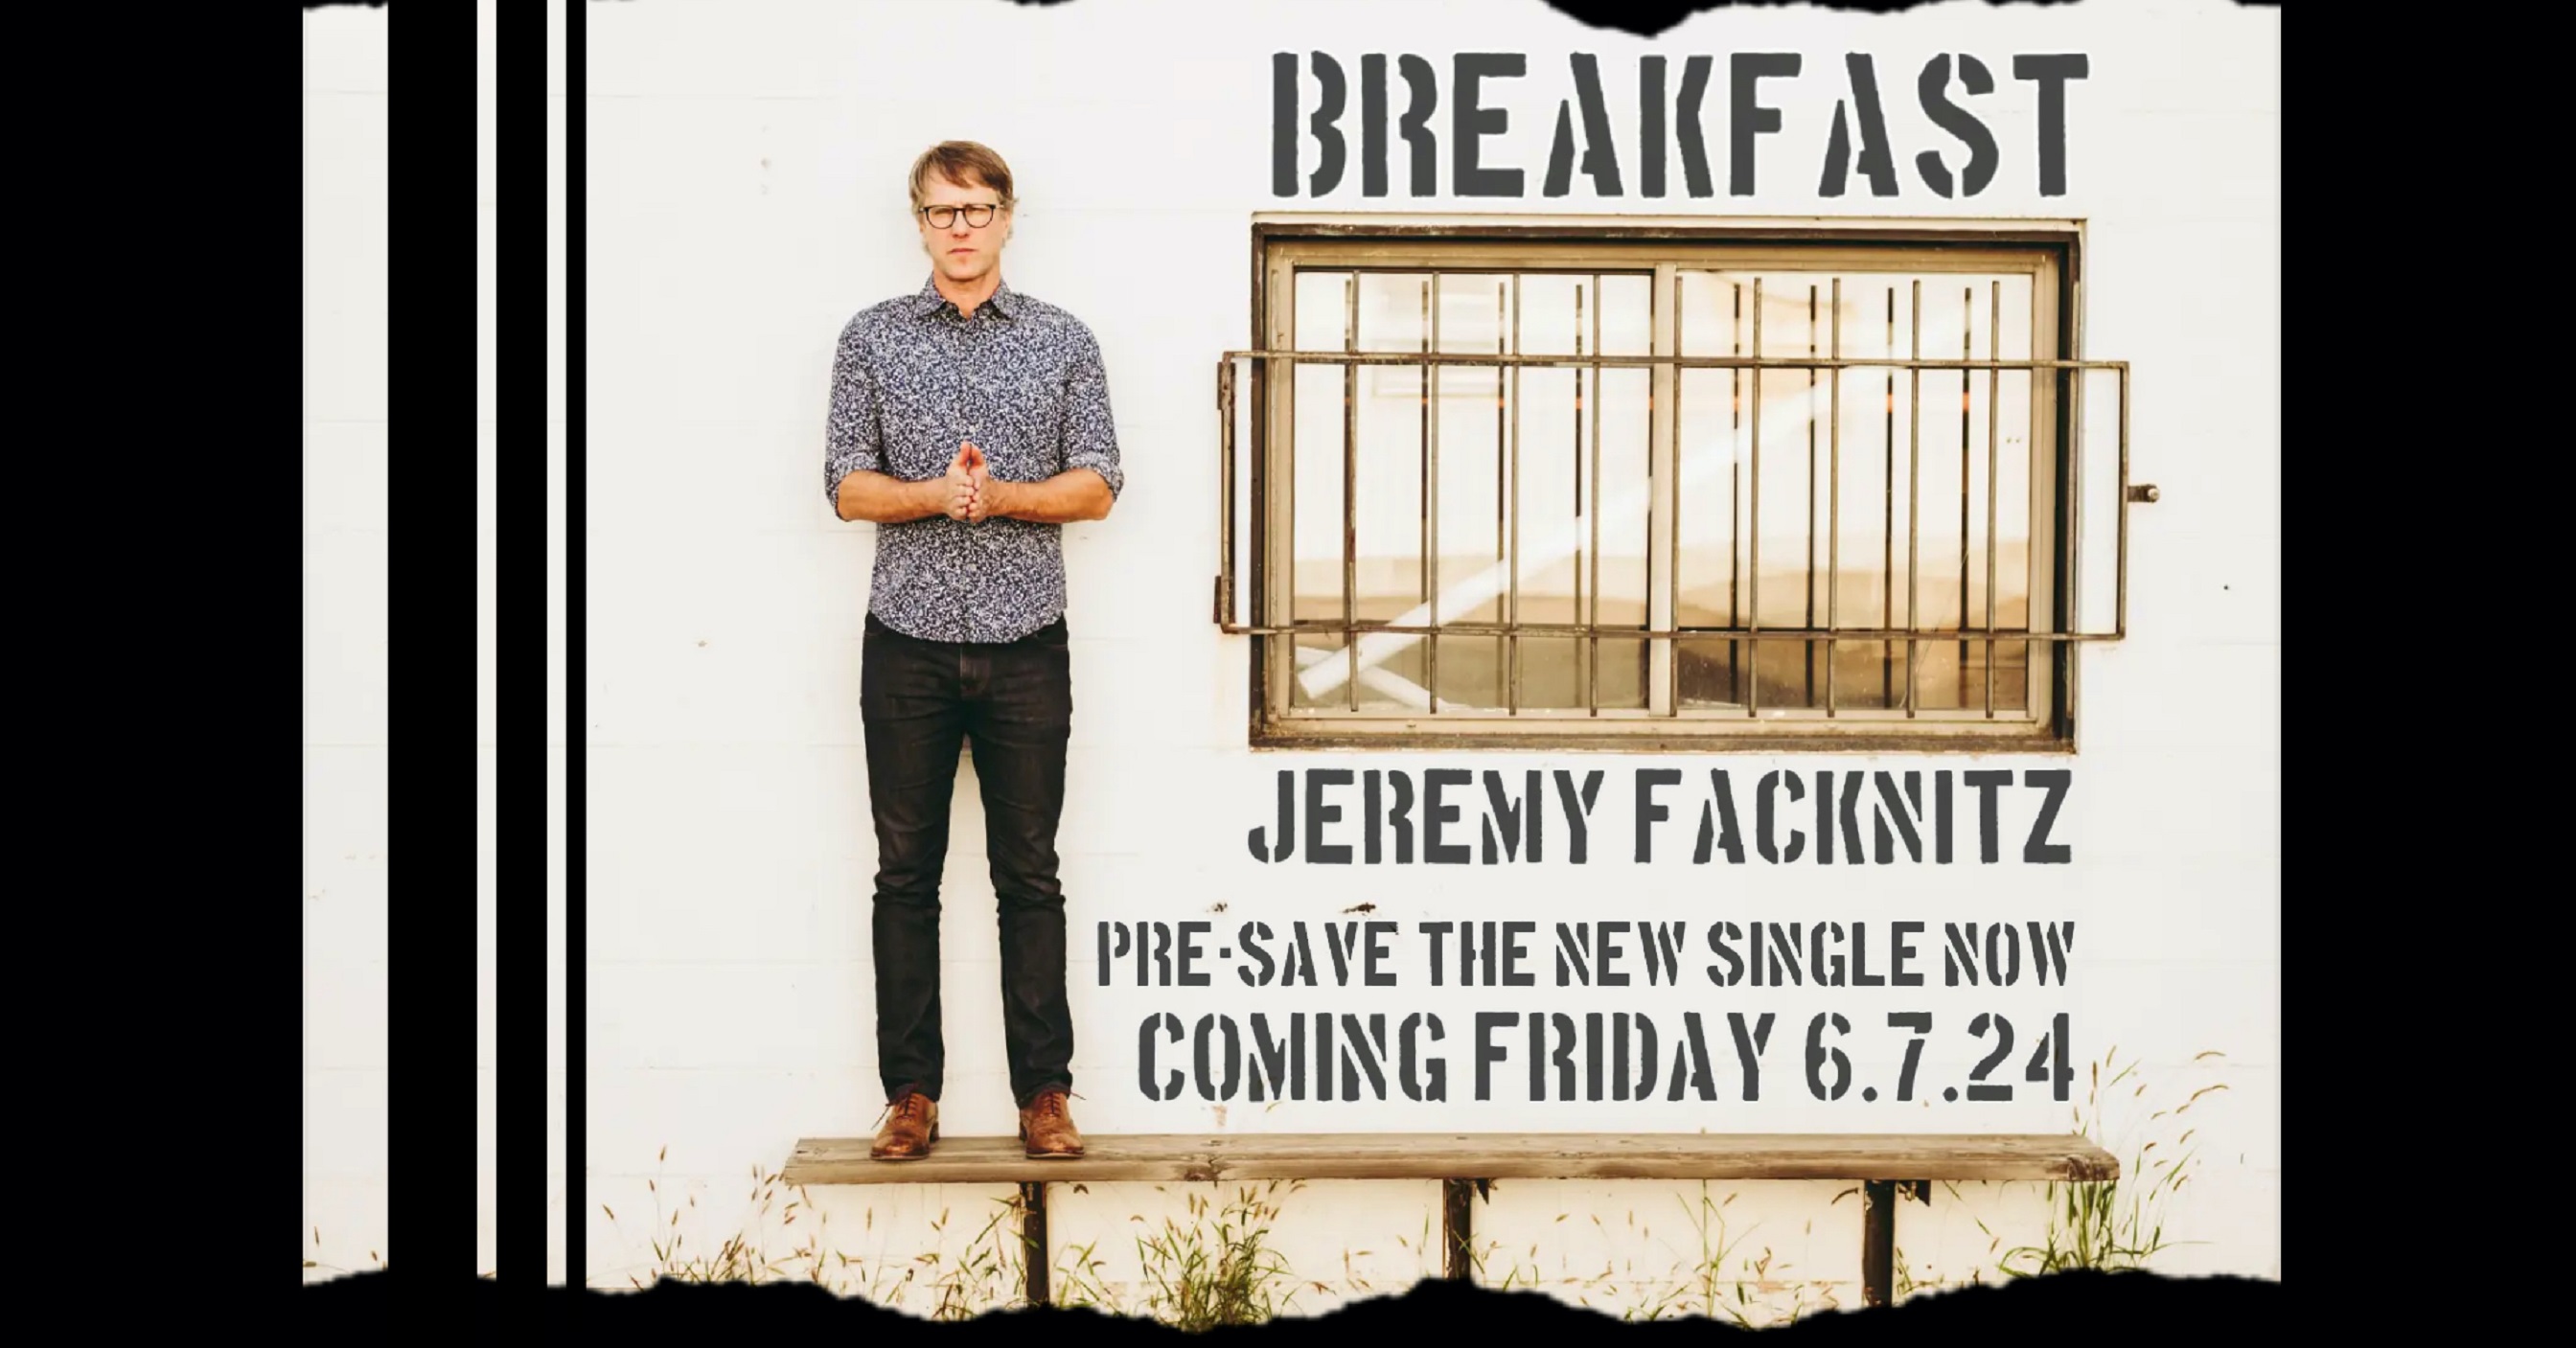 Jeremy Facknitz Releases New Single "Breakfast" on Friday, June 7th